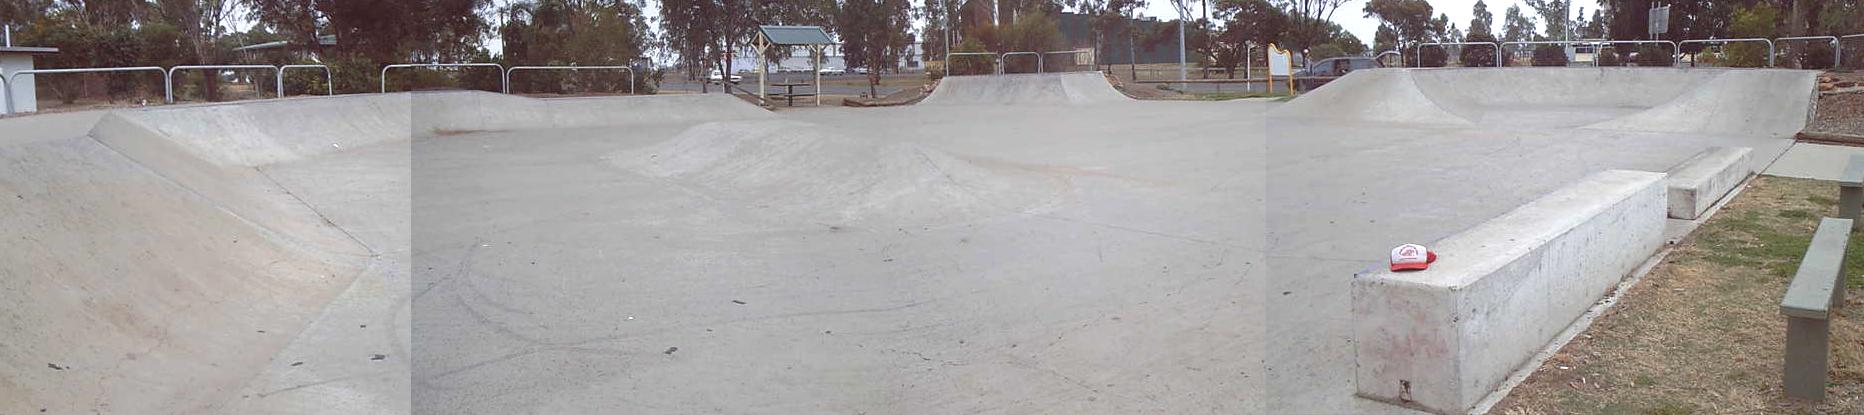 Dalby Skate Park